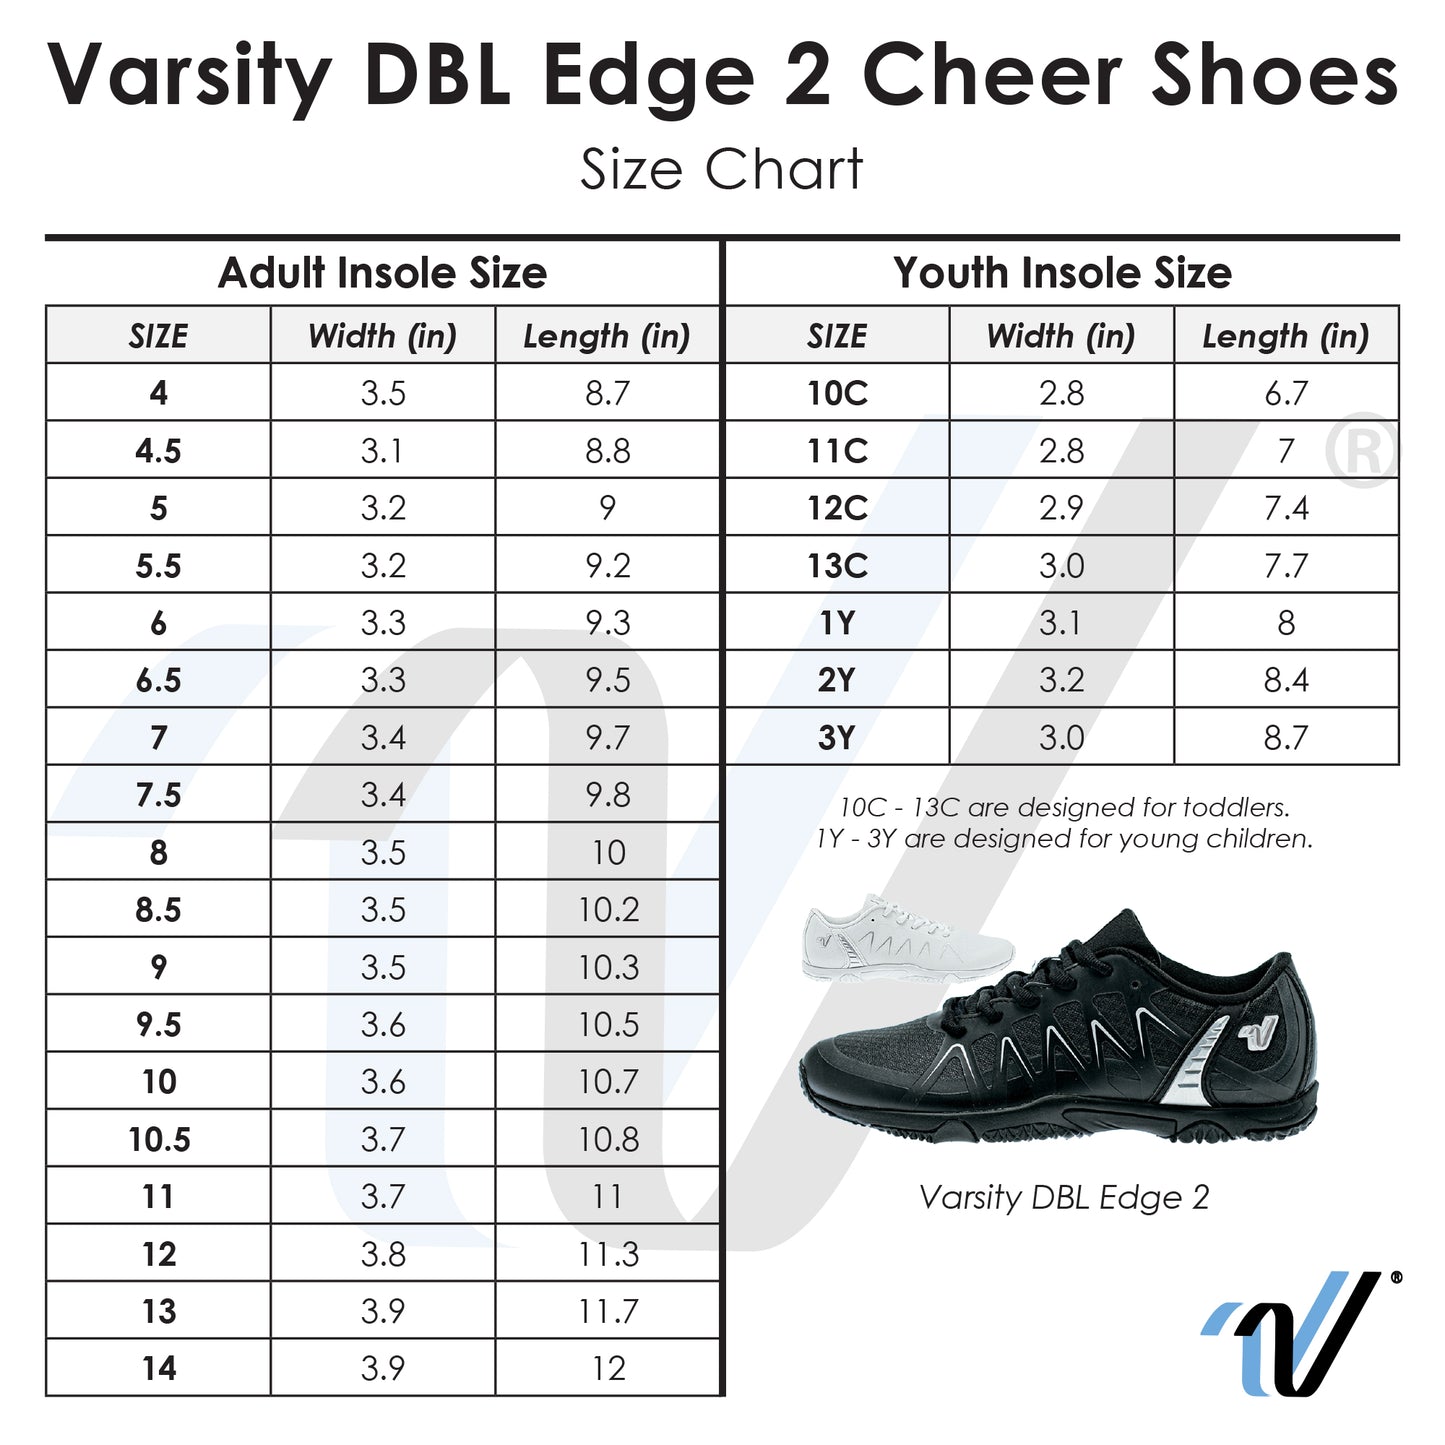 Varsity DBL EDGE 2 Cheer Shoes